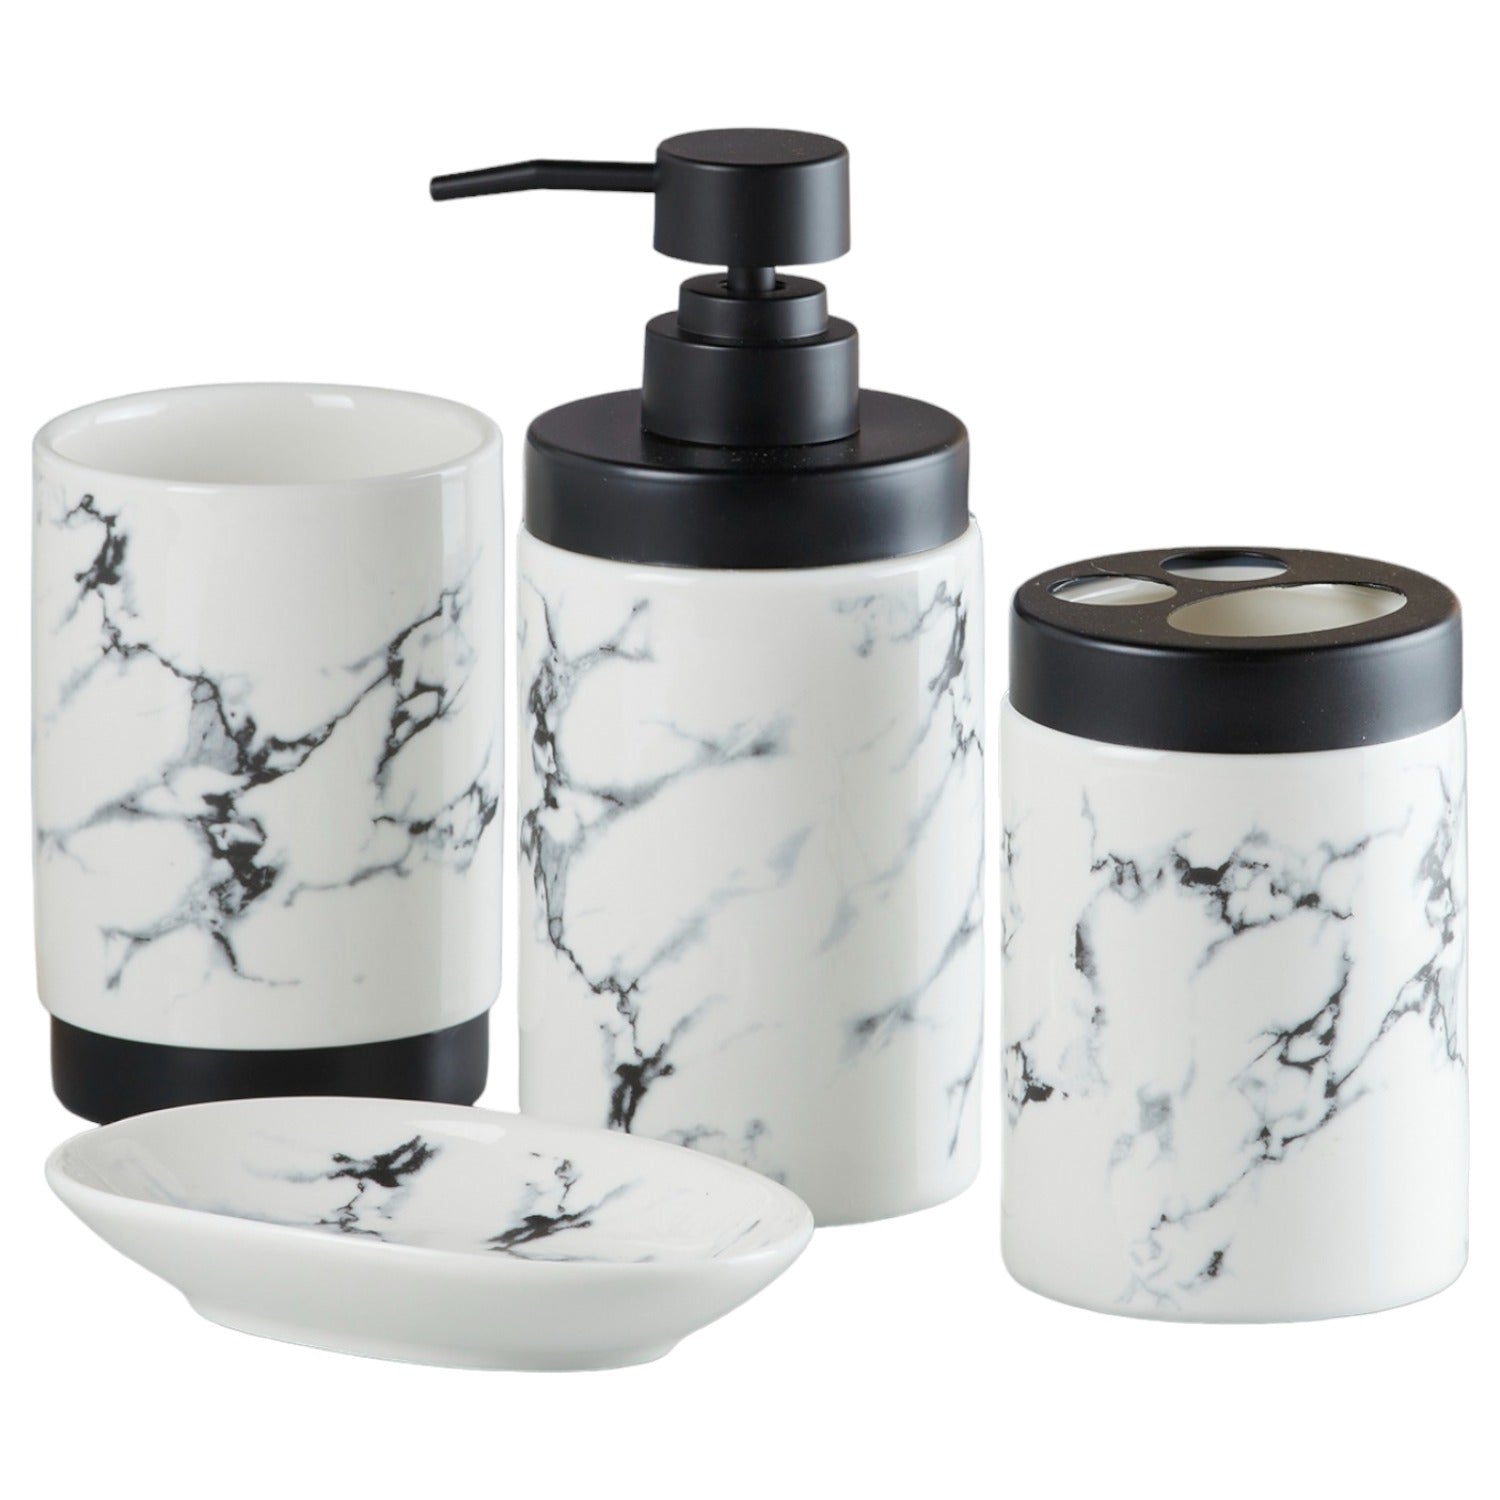 Ceramic Bathroom Accessories Set of 4 Bath Set with Soap Dispenser (9598)